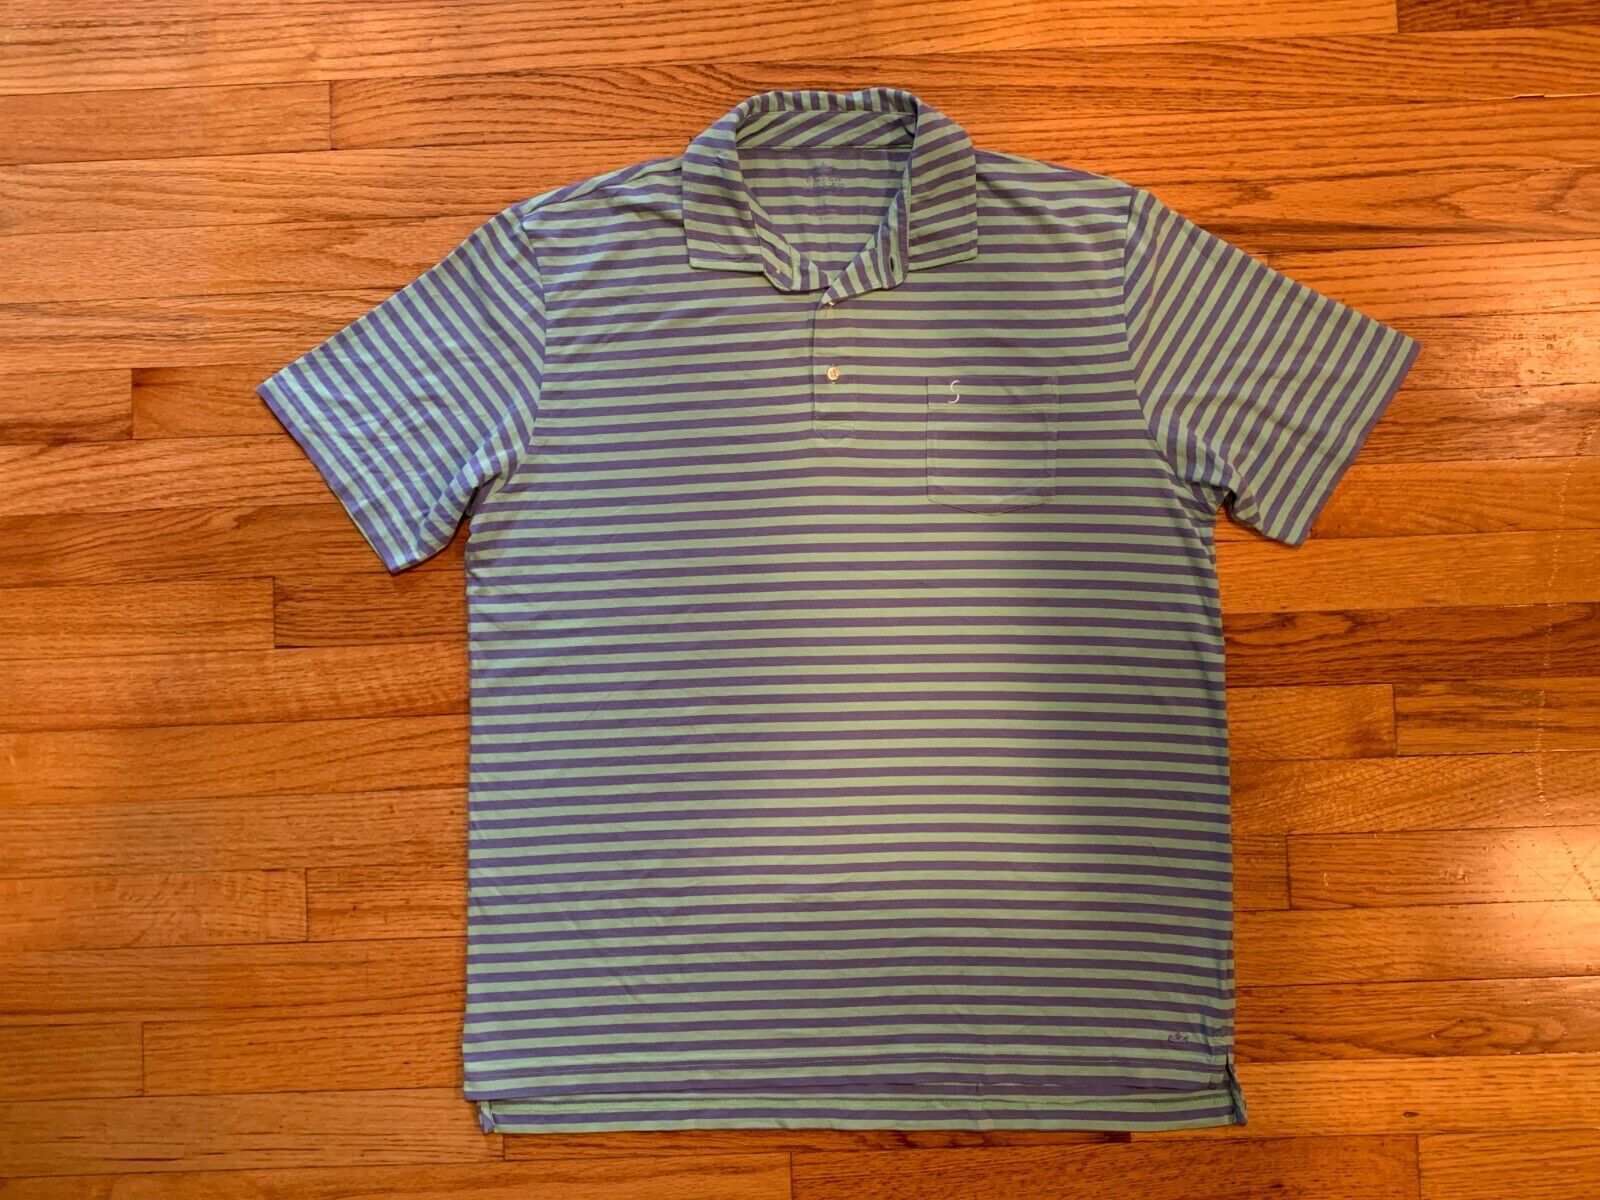 Peter Millar Seaside Wash Polo Shirt Large Green Blue Striped Short Sleeve Golf